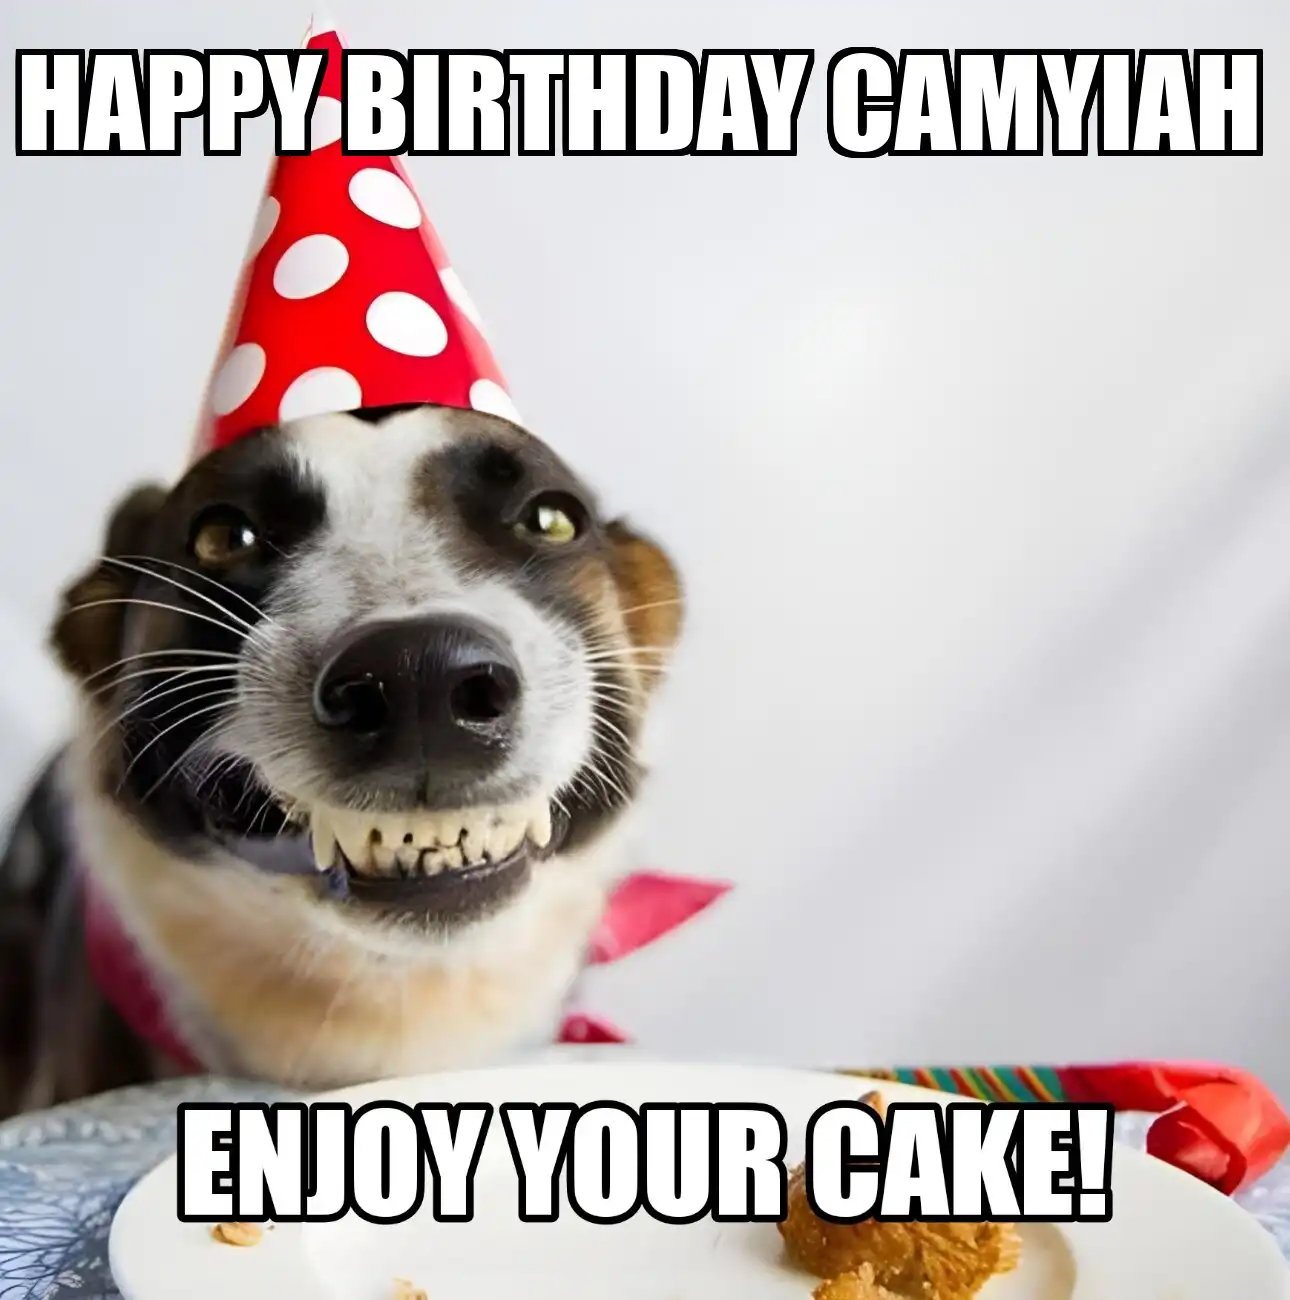 Happy Birthday Camyiah Enjoy Your Cake Dog Meme